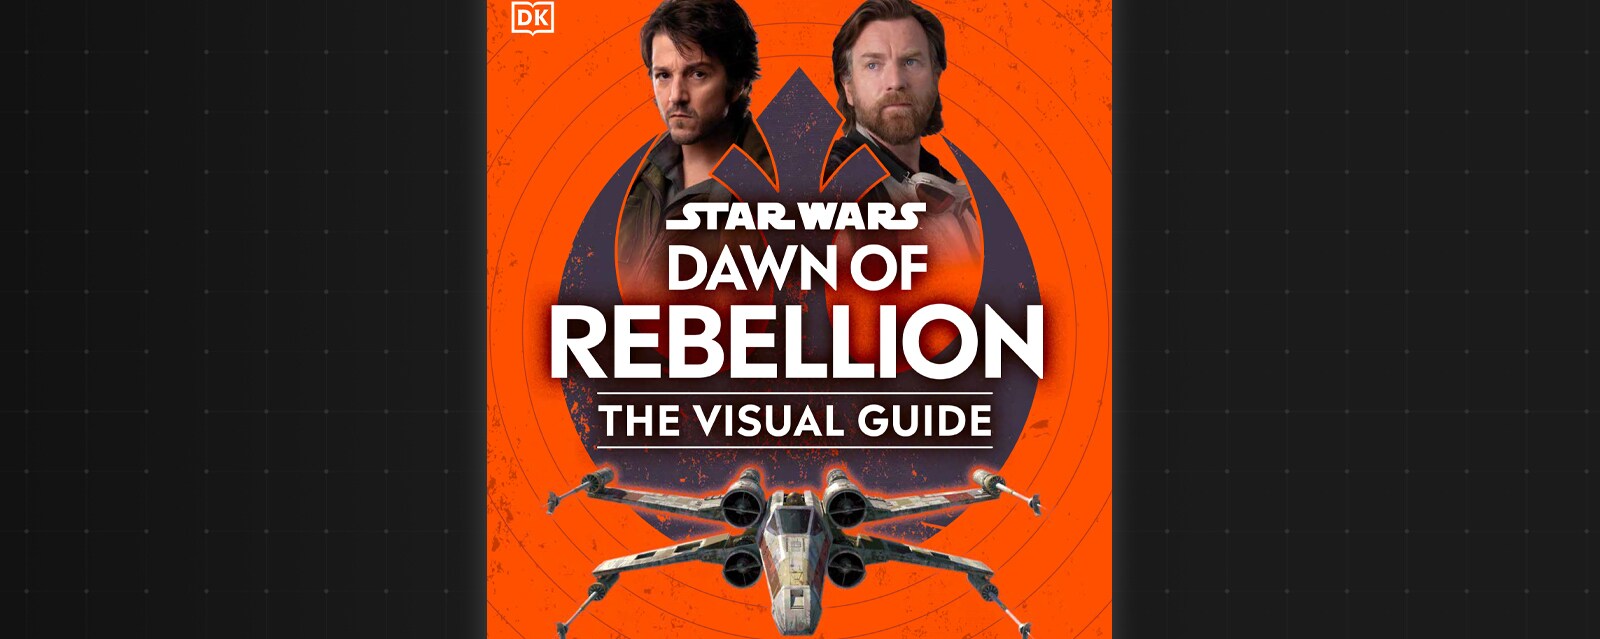 Star Wars: Dawn of Rebellion cover